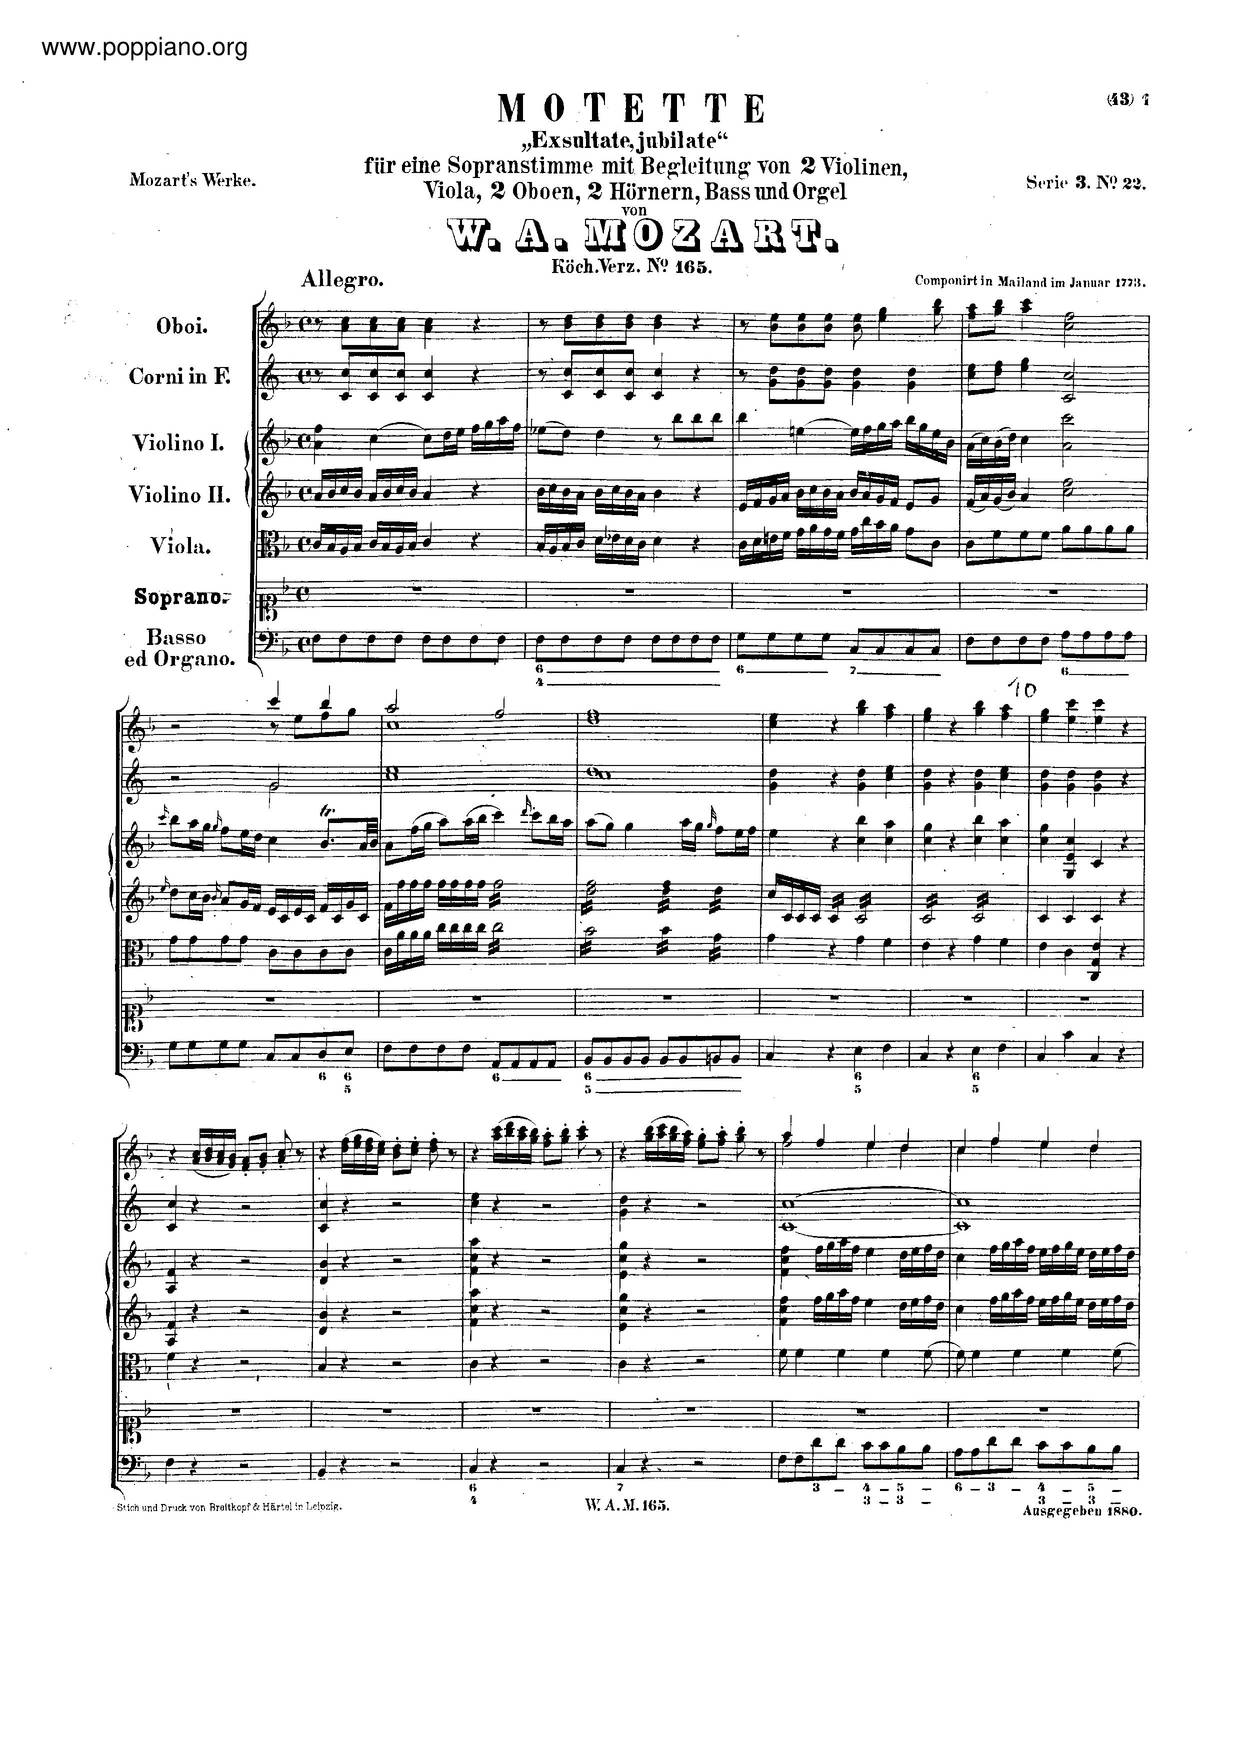 Exsultate, Jubilate, K. 165/158A琴譜